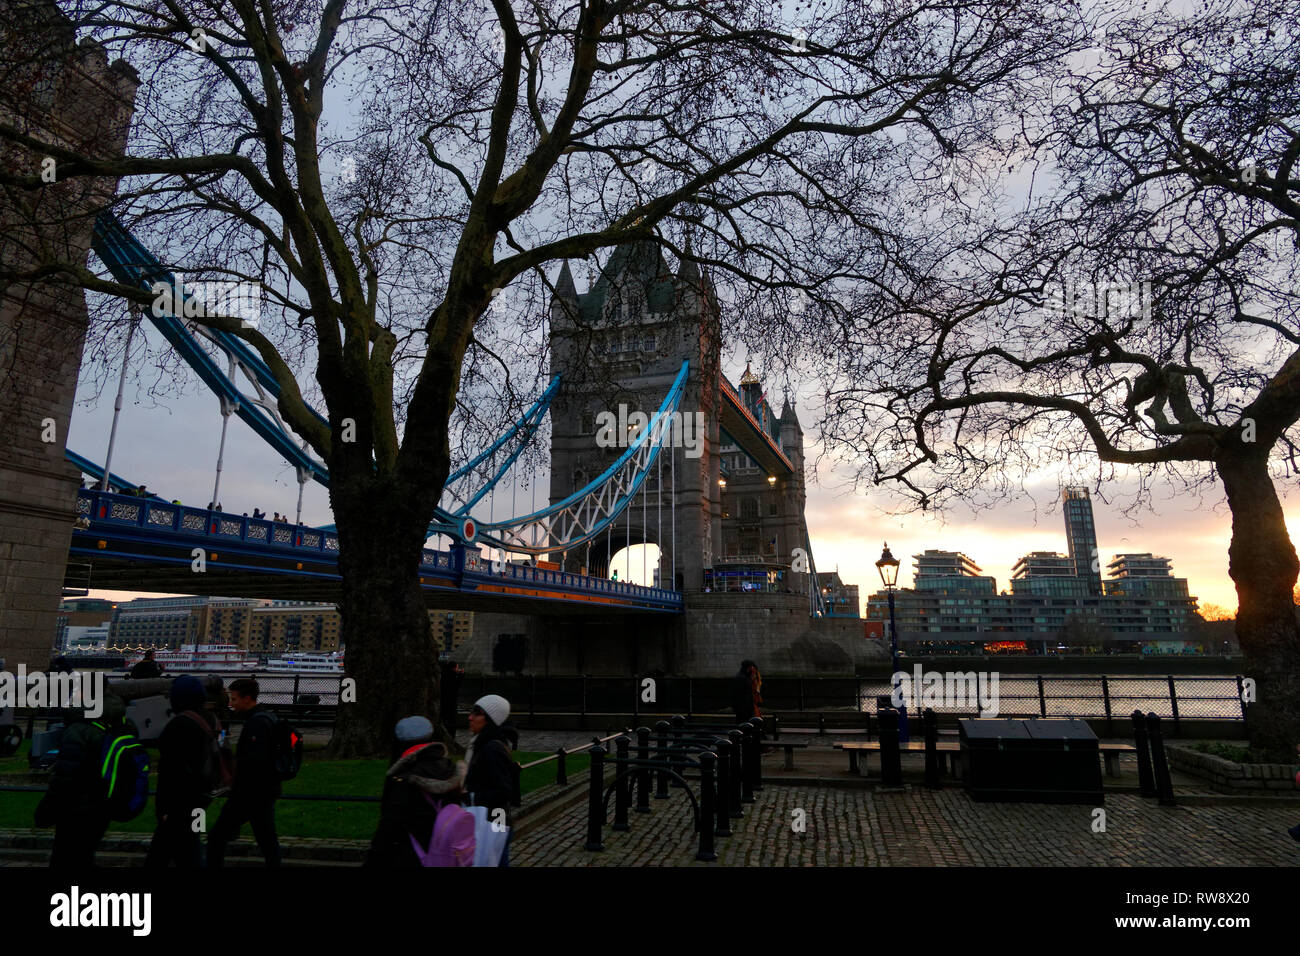 Tower Gate Bridge, London, United Kingdom. Stock Photo